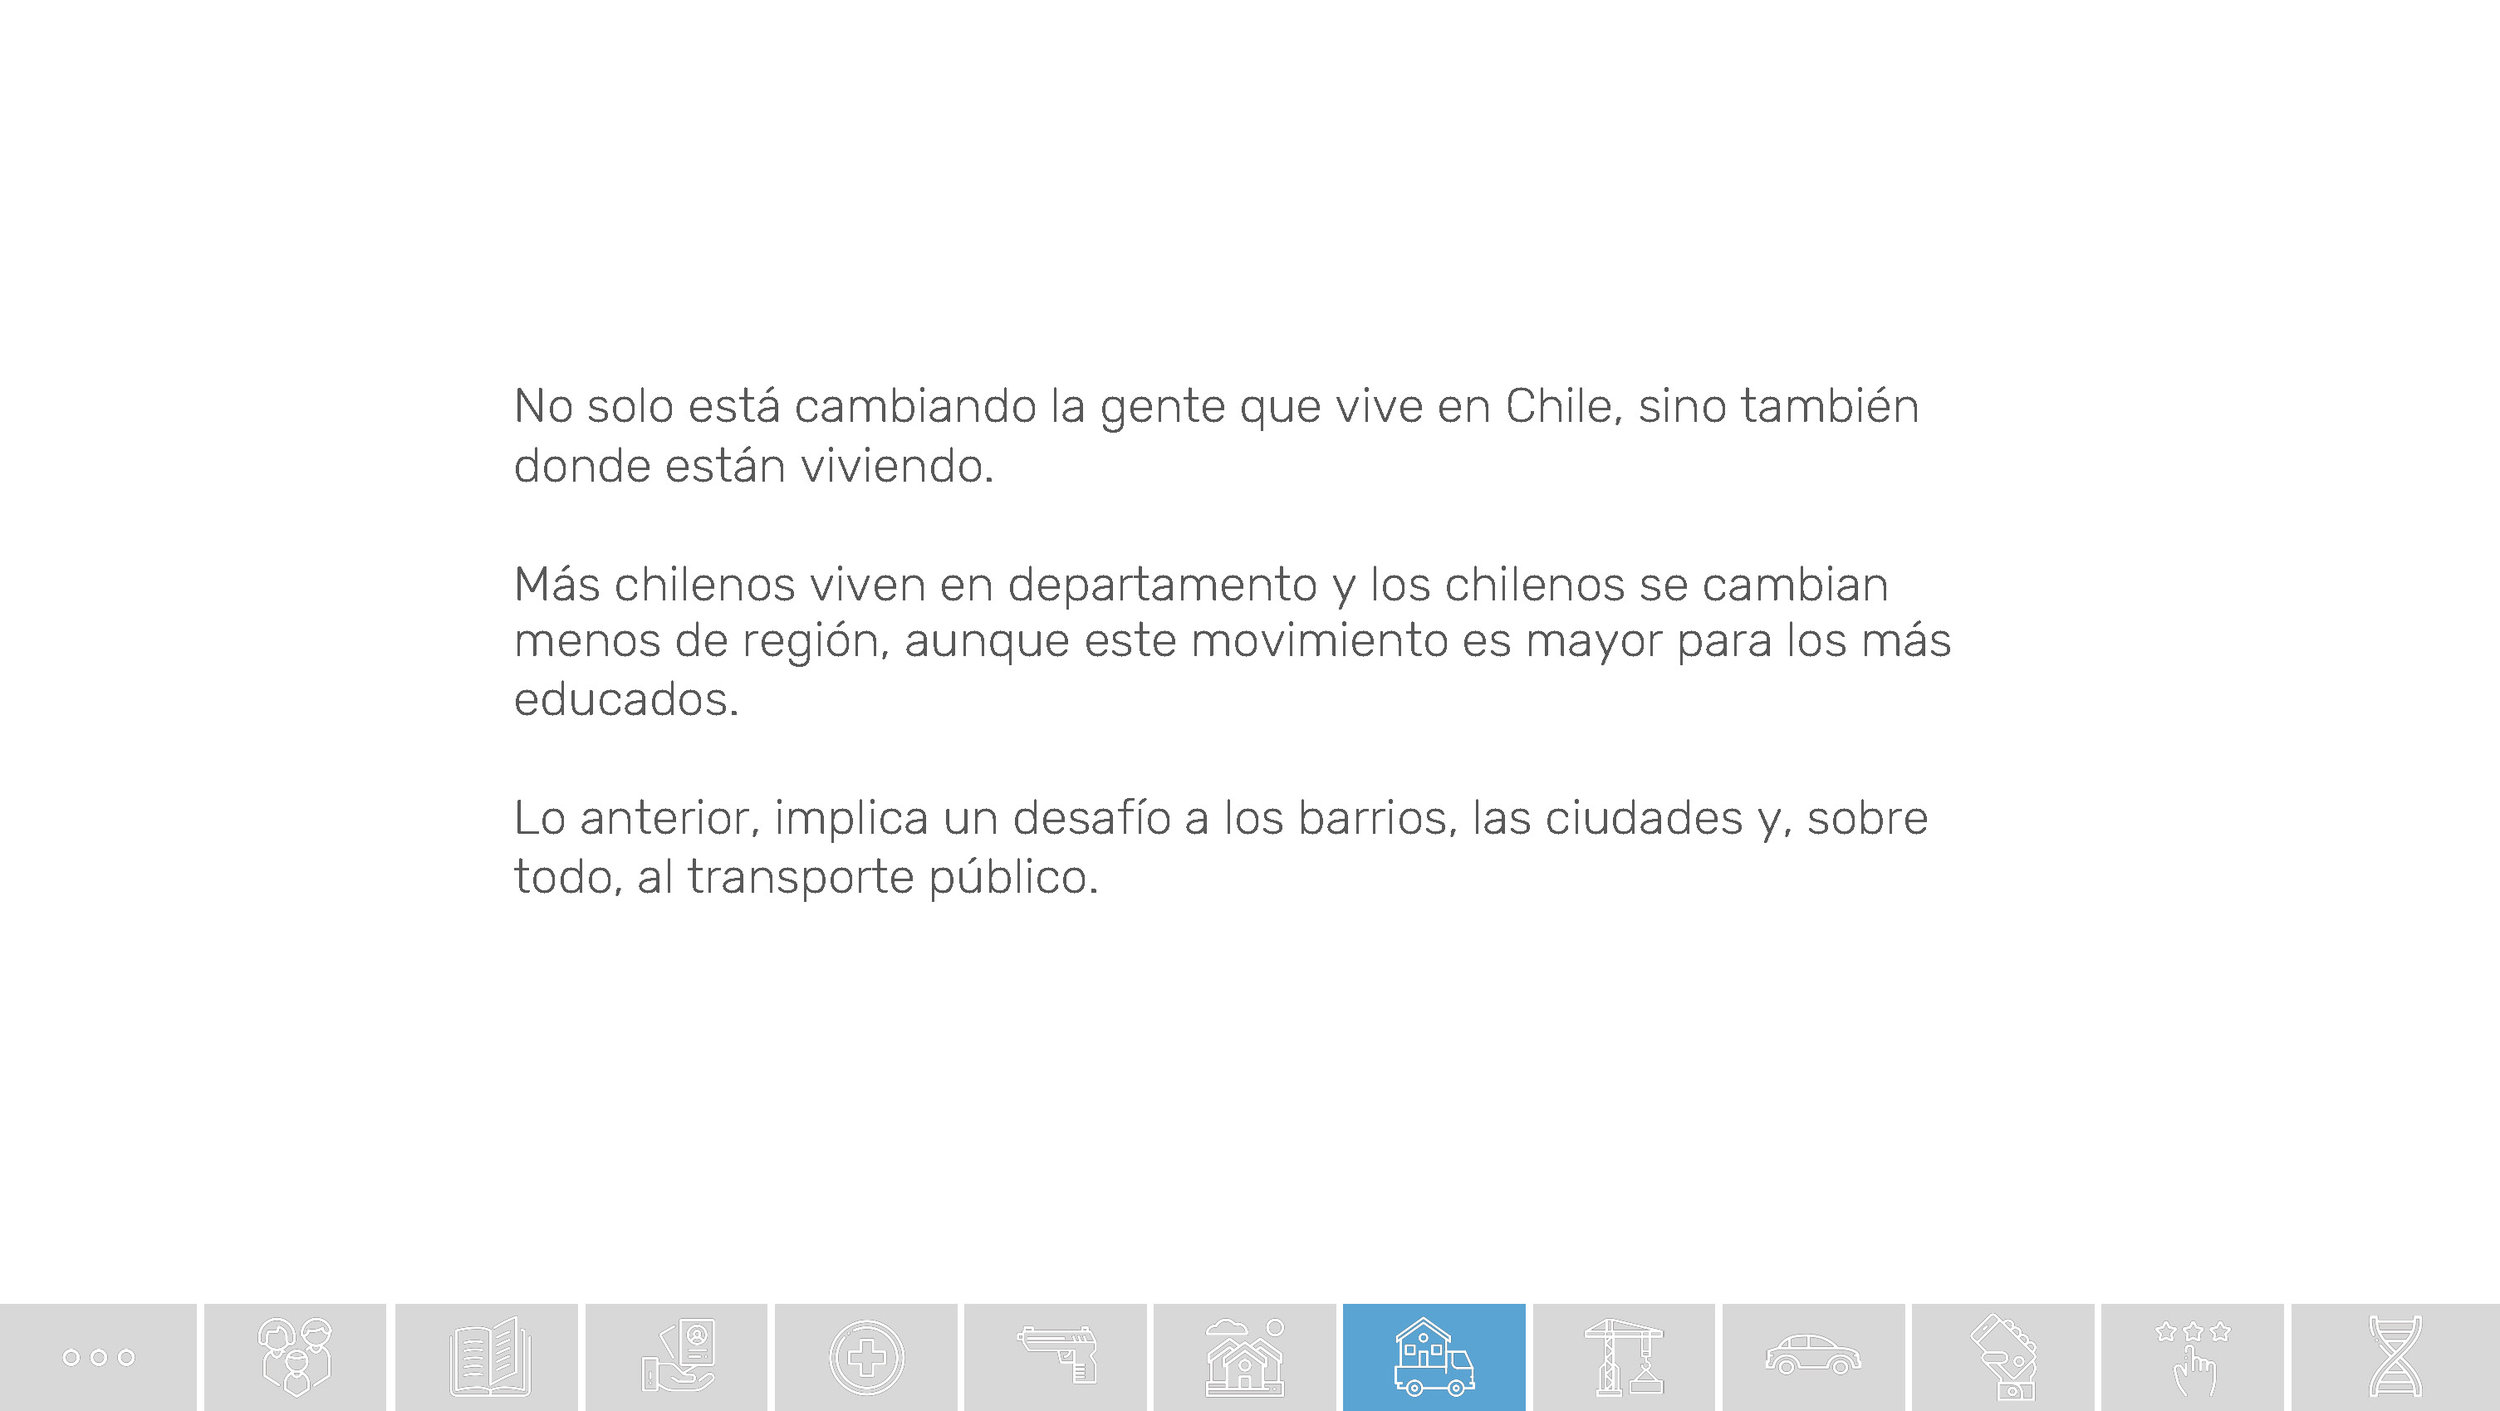 Chile_Datos de una transformacion social_Unholster_Página_54.jpg